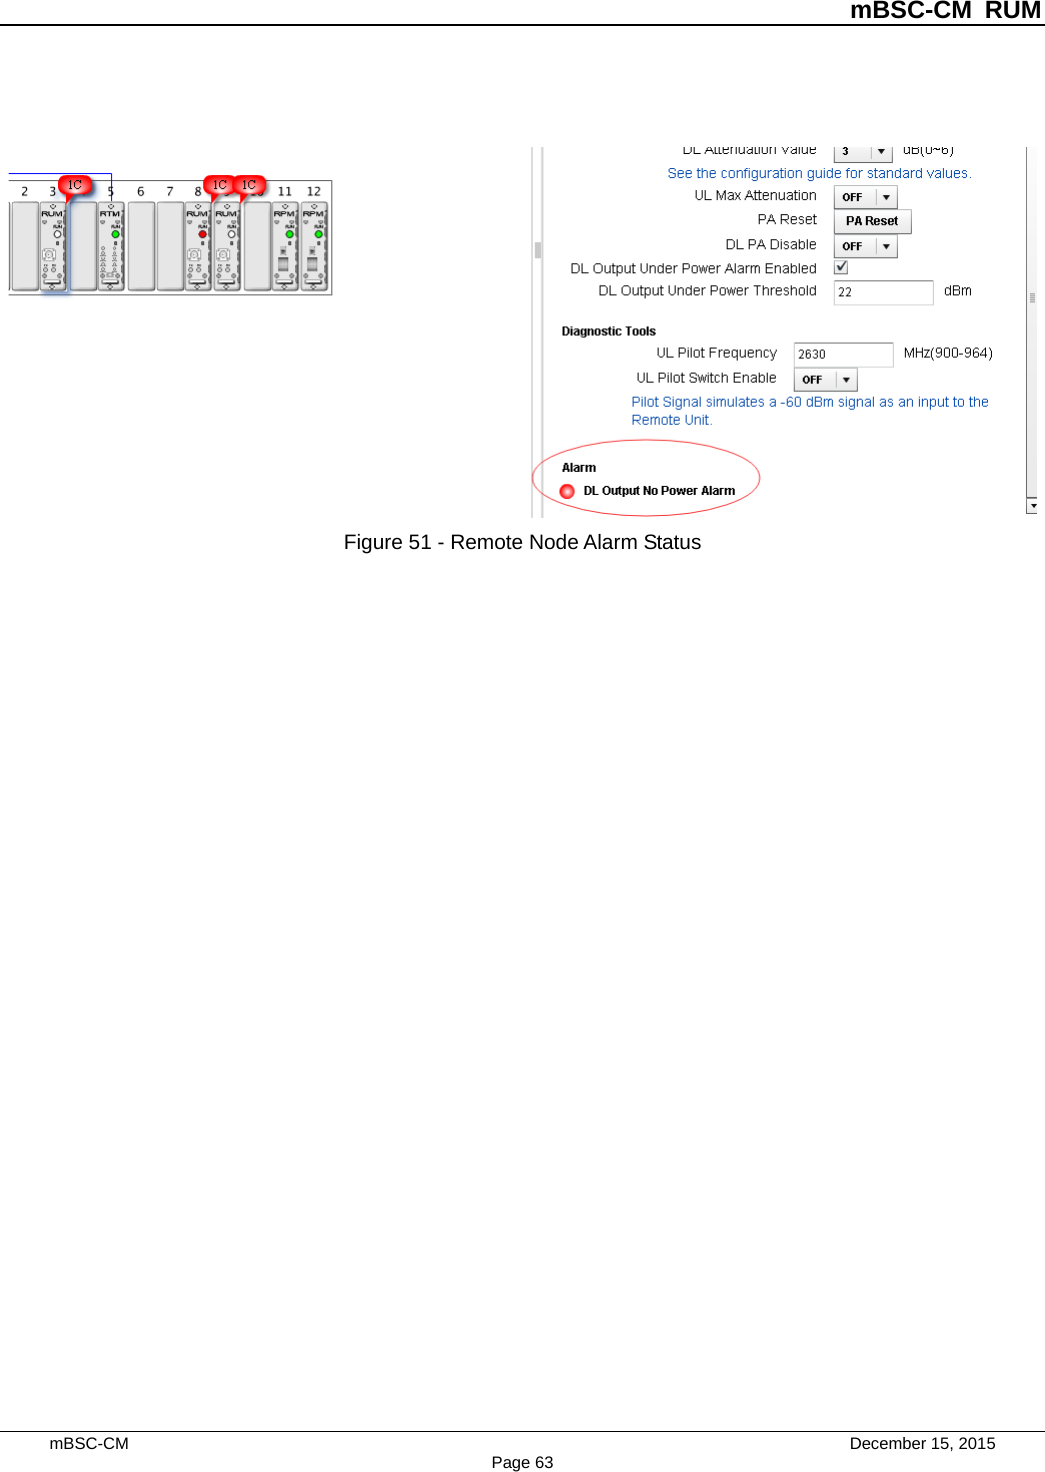          mBSC-CM RUM   mBSC-CM                                 December 15, 2015 Page 63   Figure 51 - Remote Node Alarm Status 